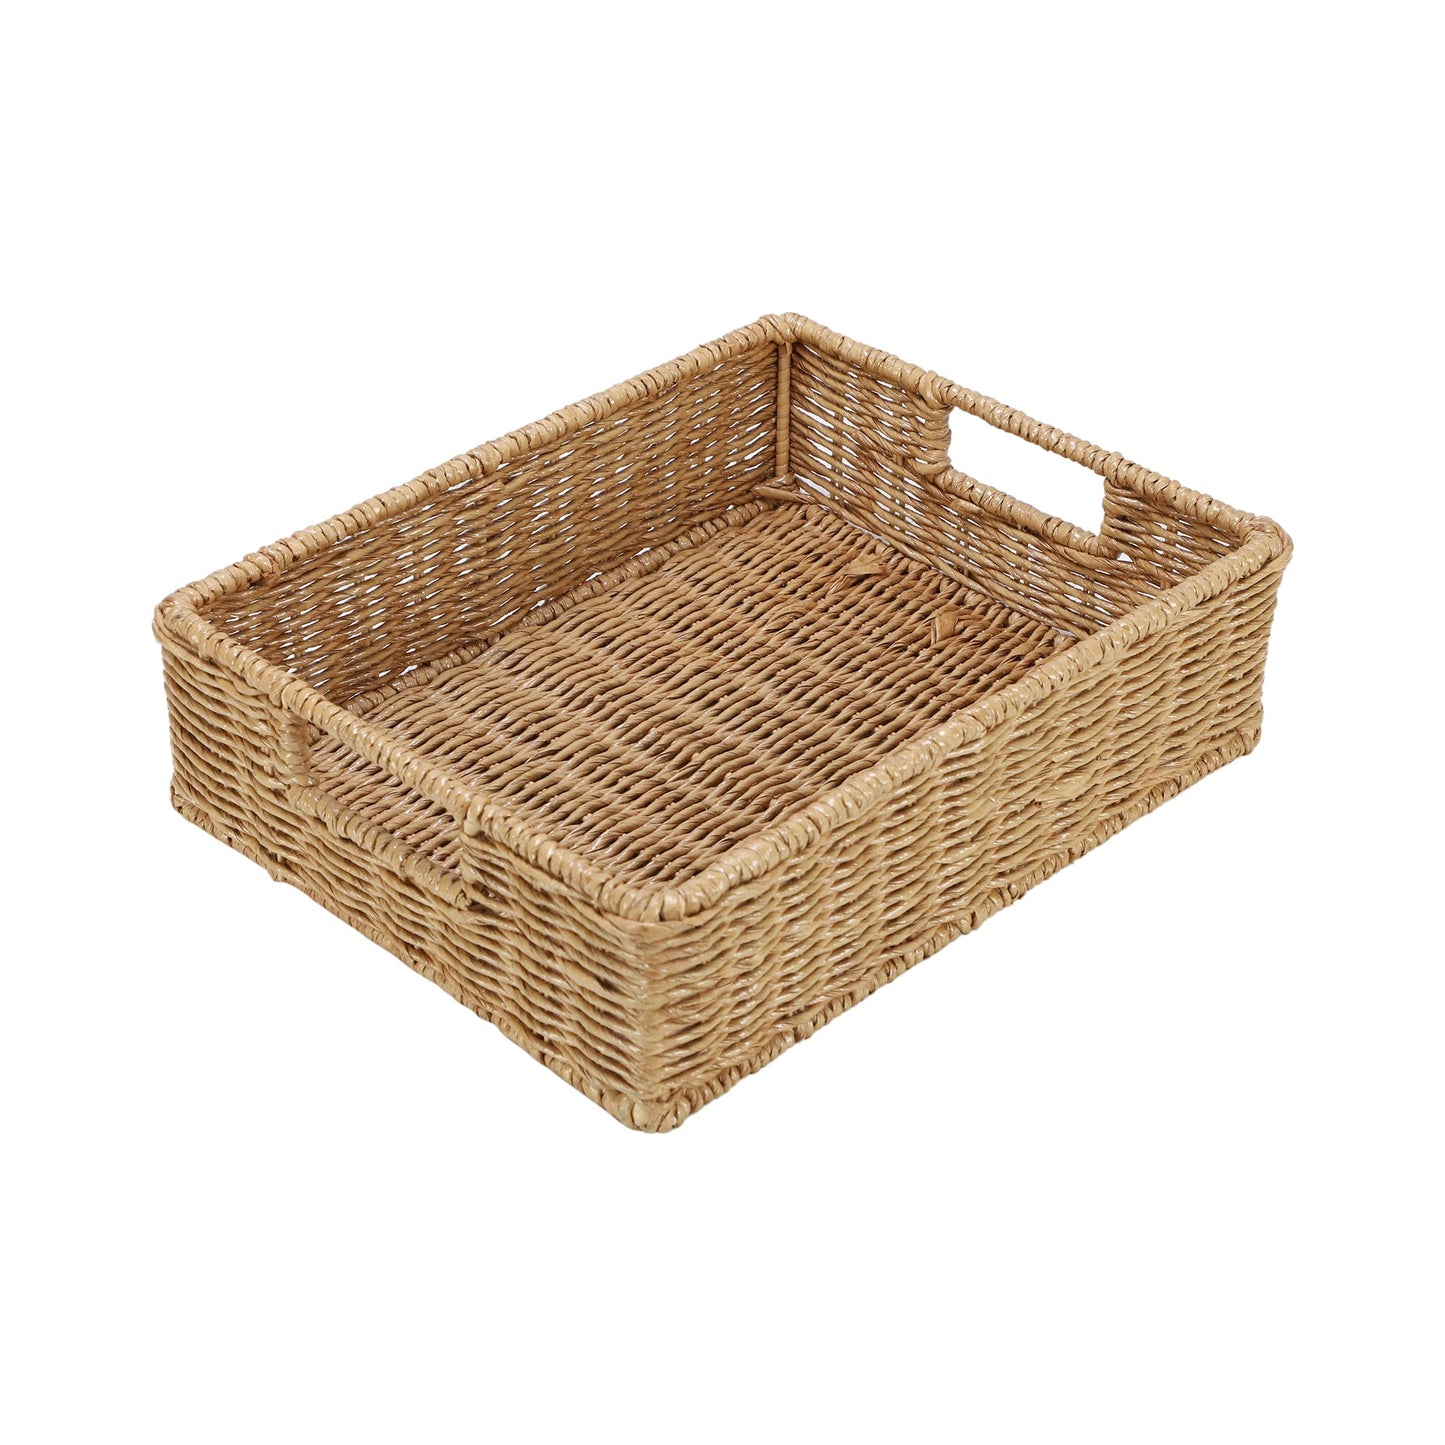 AKWAY wicker seagrass kauna grass water hyacinth rattan cane storage basket - (Beige) (14" L x 10"W x 4" H,Pack of 1) - Akway